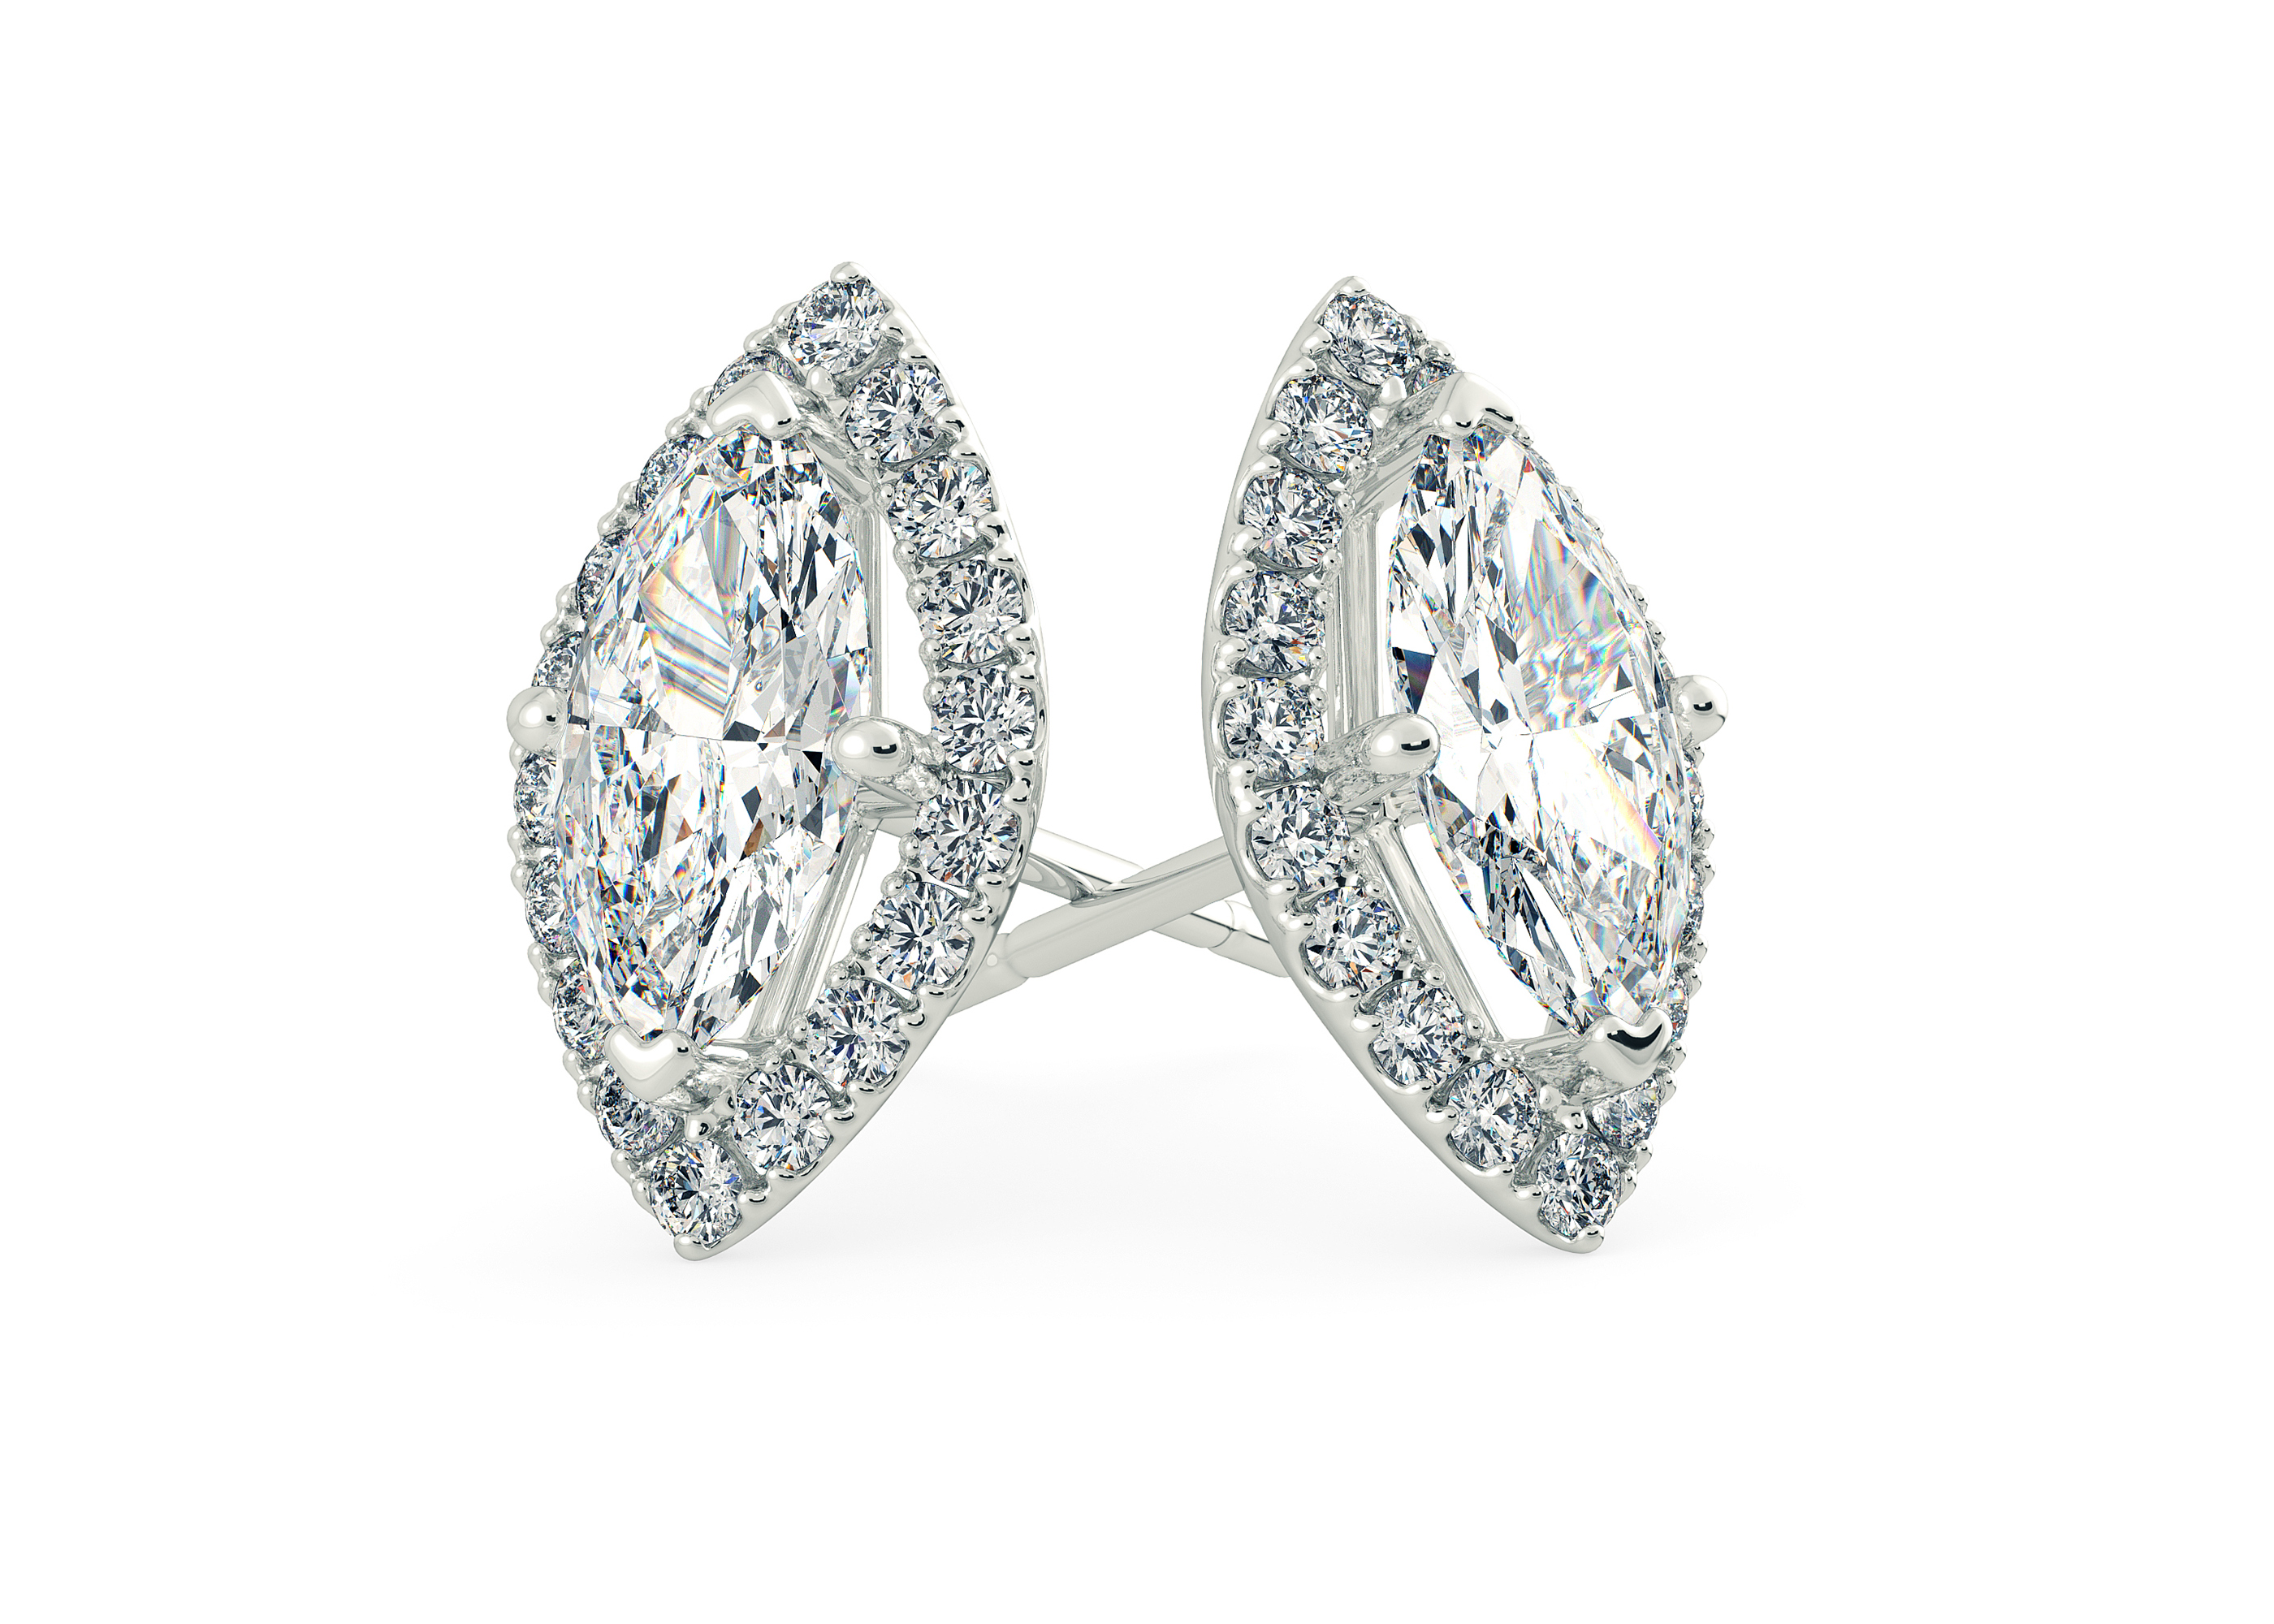 Bijou Marquise Diamond Stud Earrings in 18K White Gold with Alpha Backs